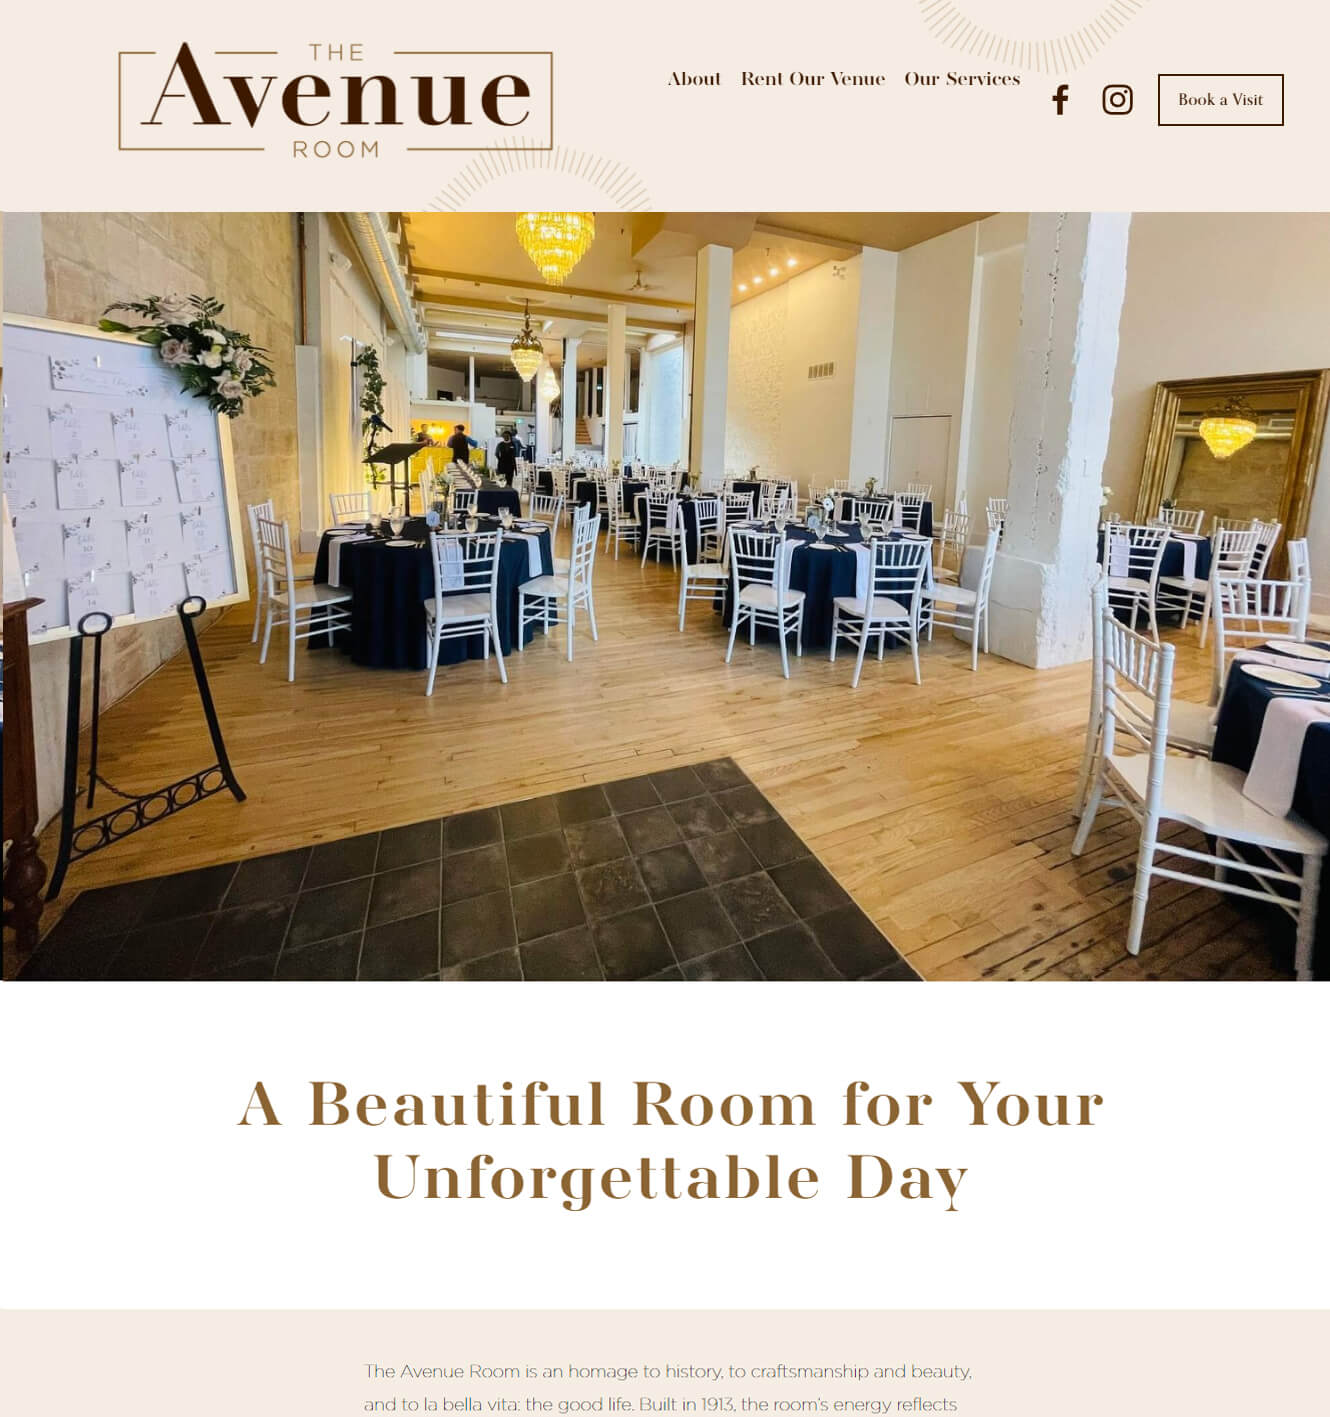 Homepage of The Avenue Room website